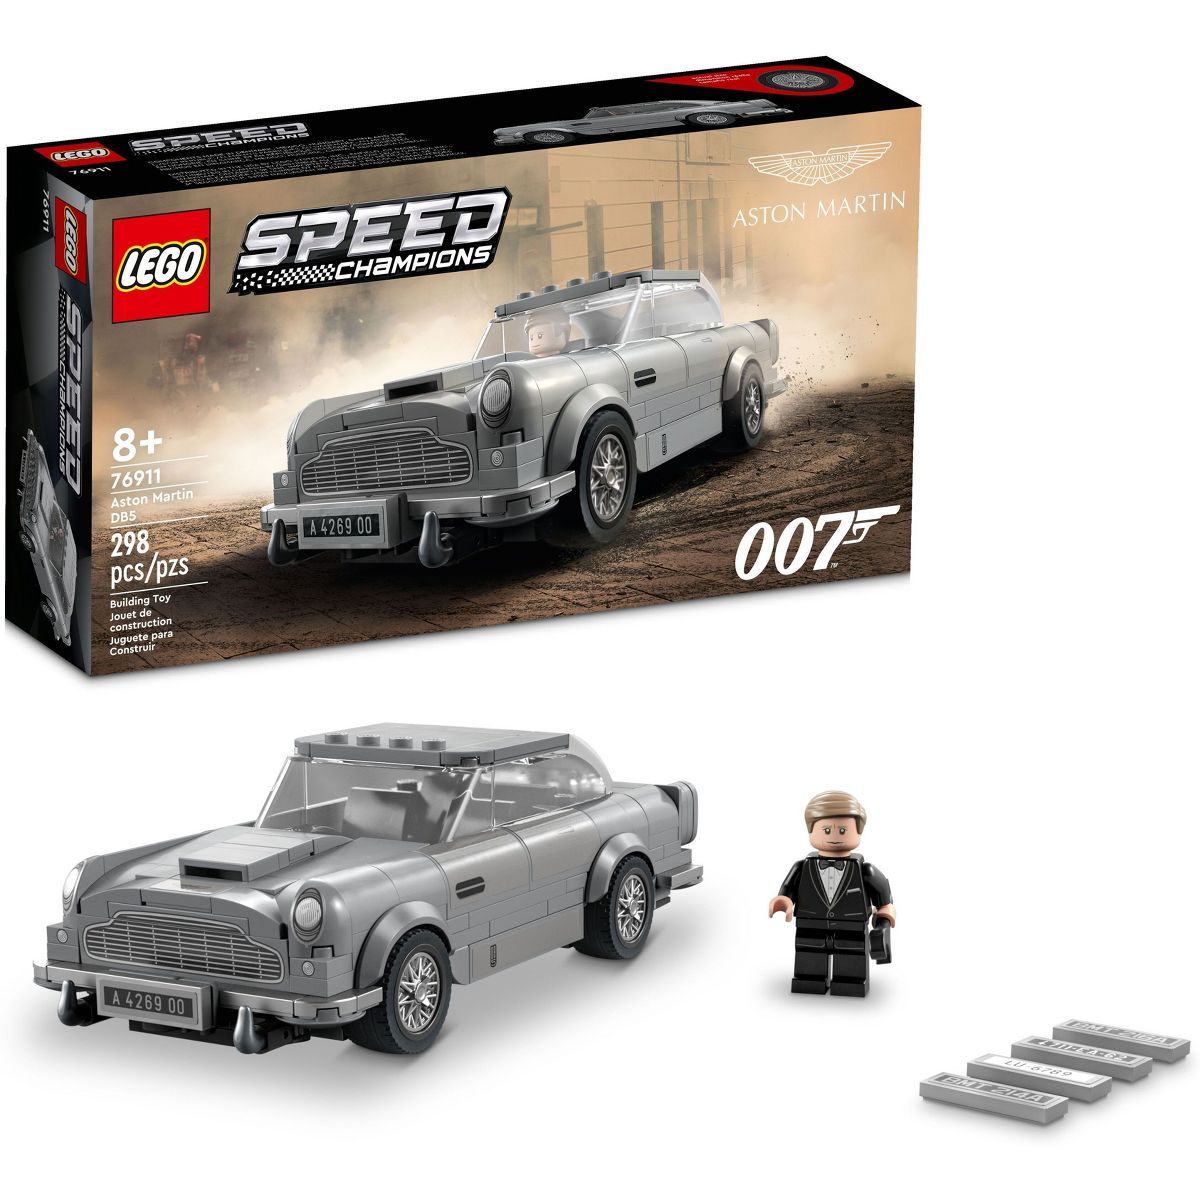 LEGO Speed Champions 007 Aston Martin DB5 Car Toy 76911 | Target